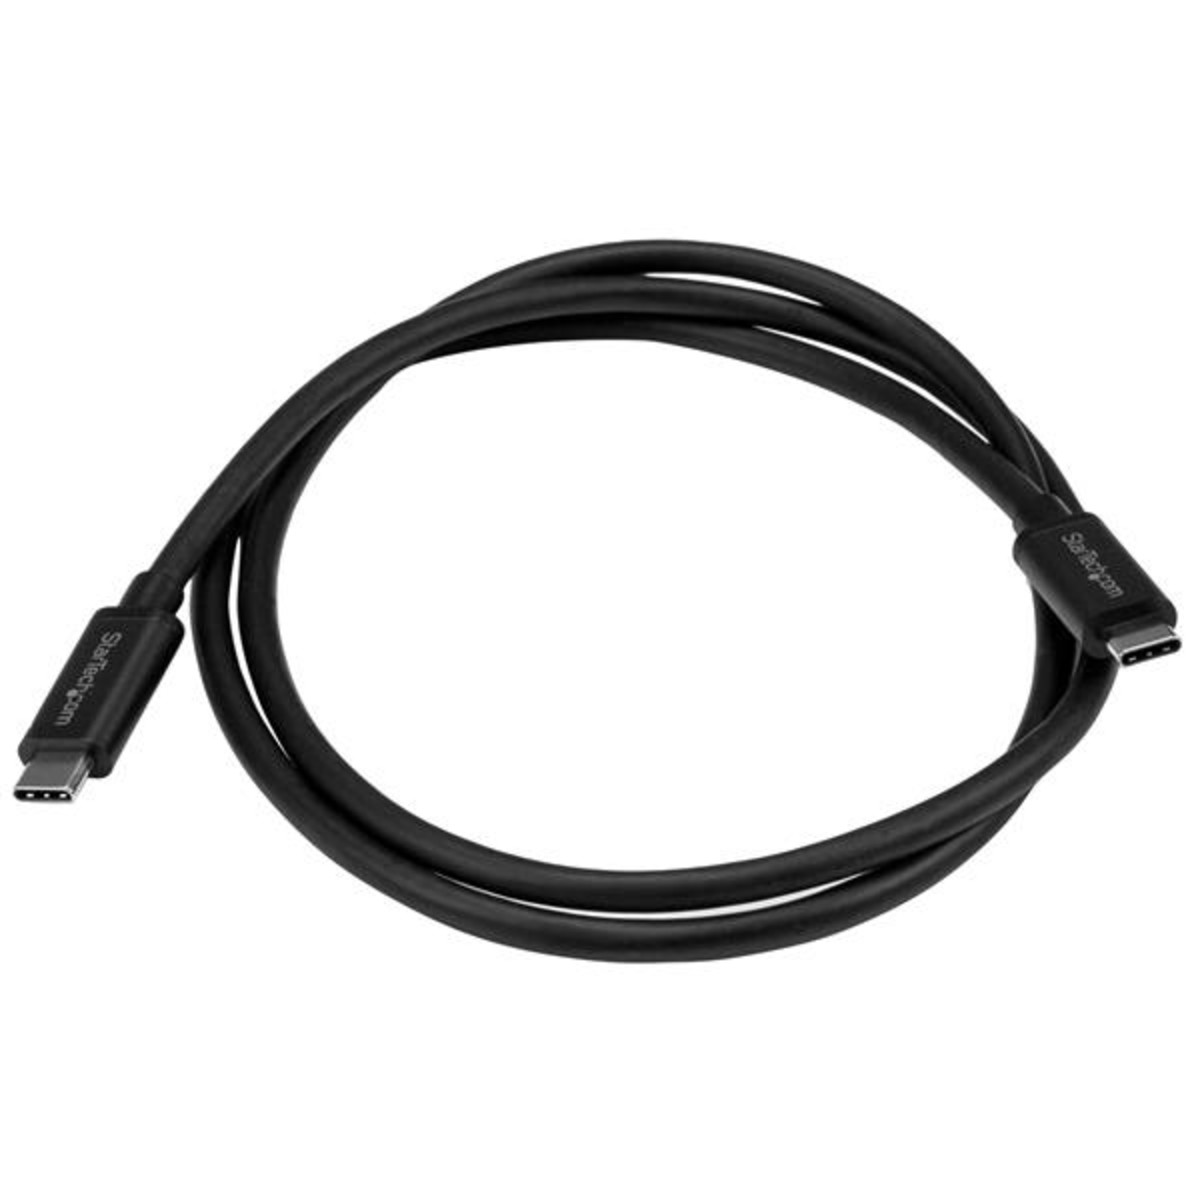 USB-C Cable - M/M - 1m (3ft)